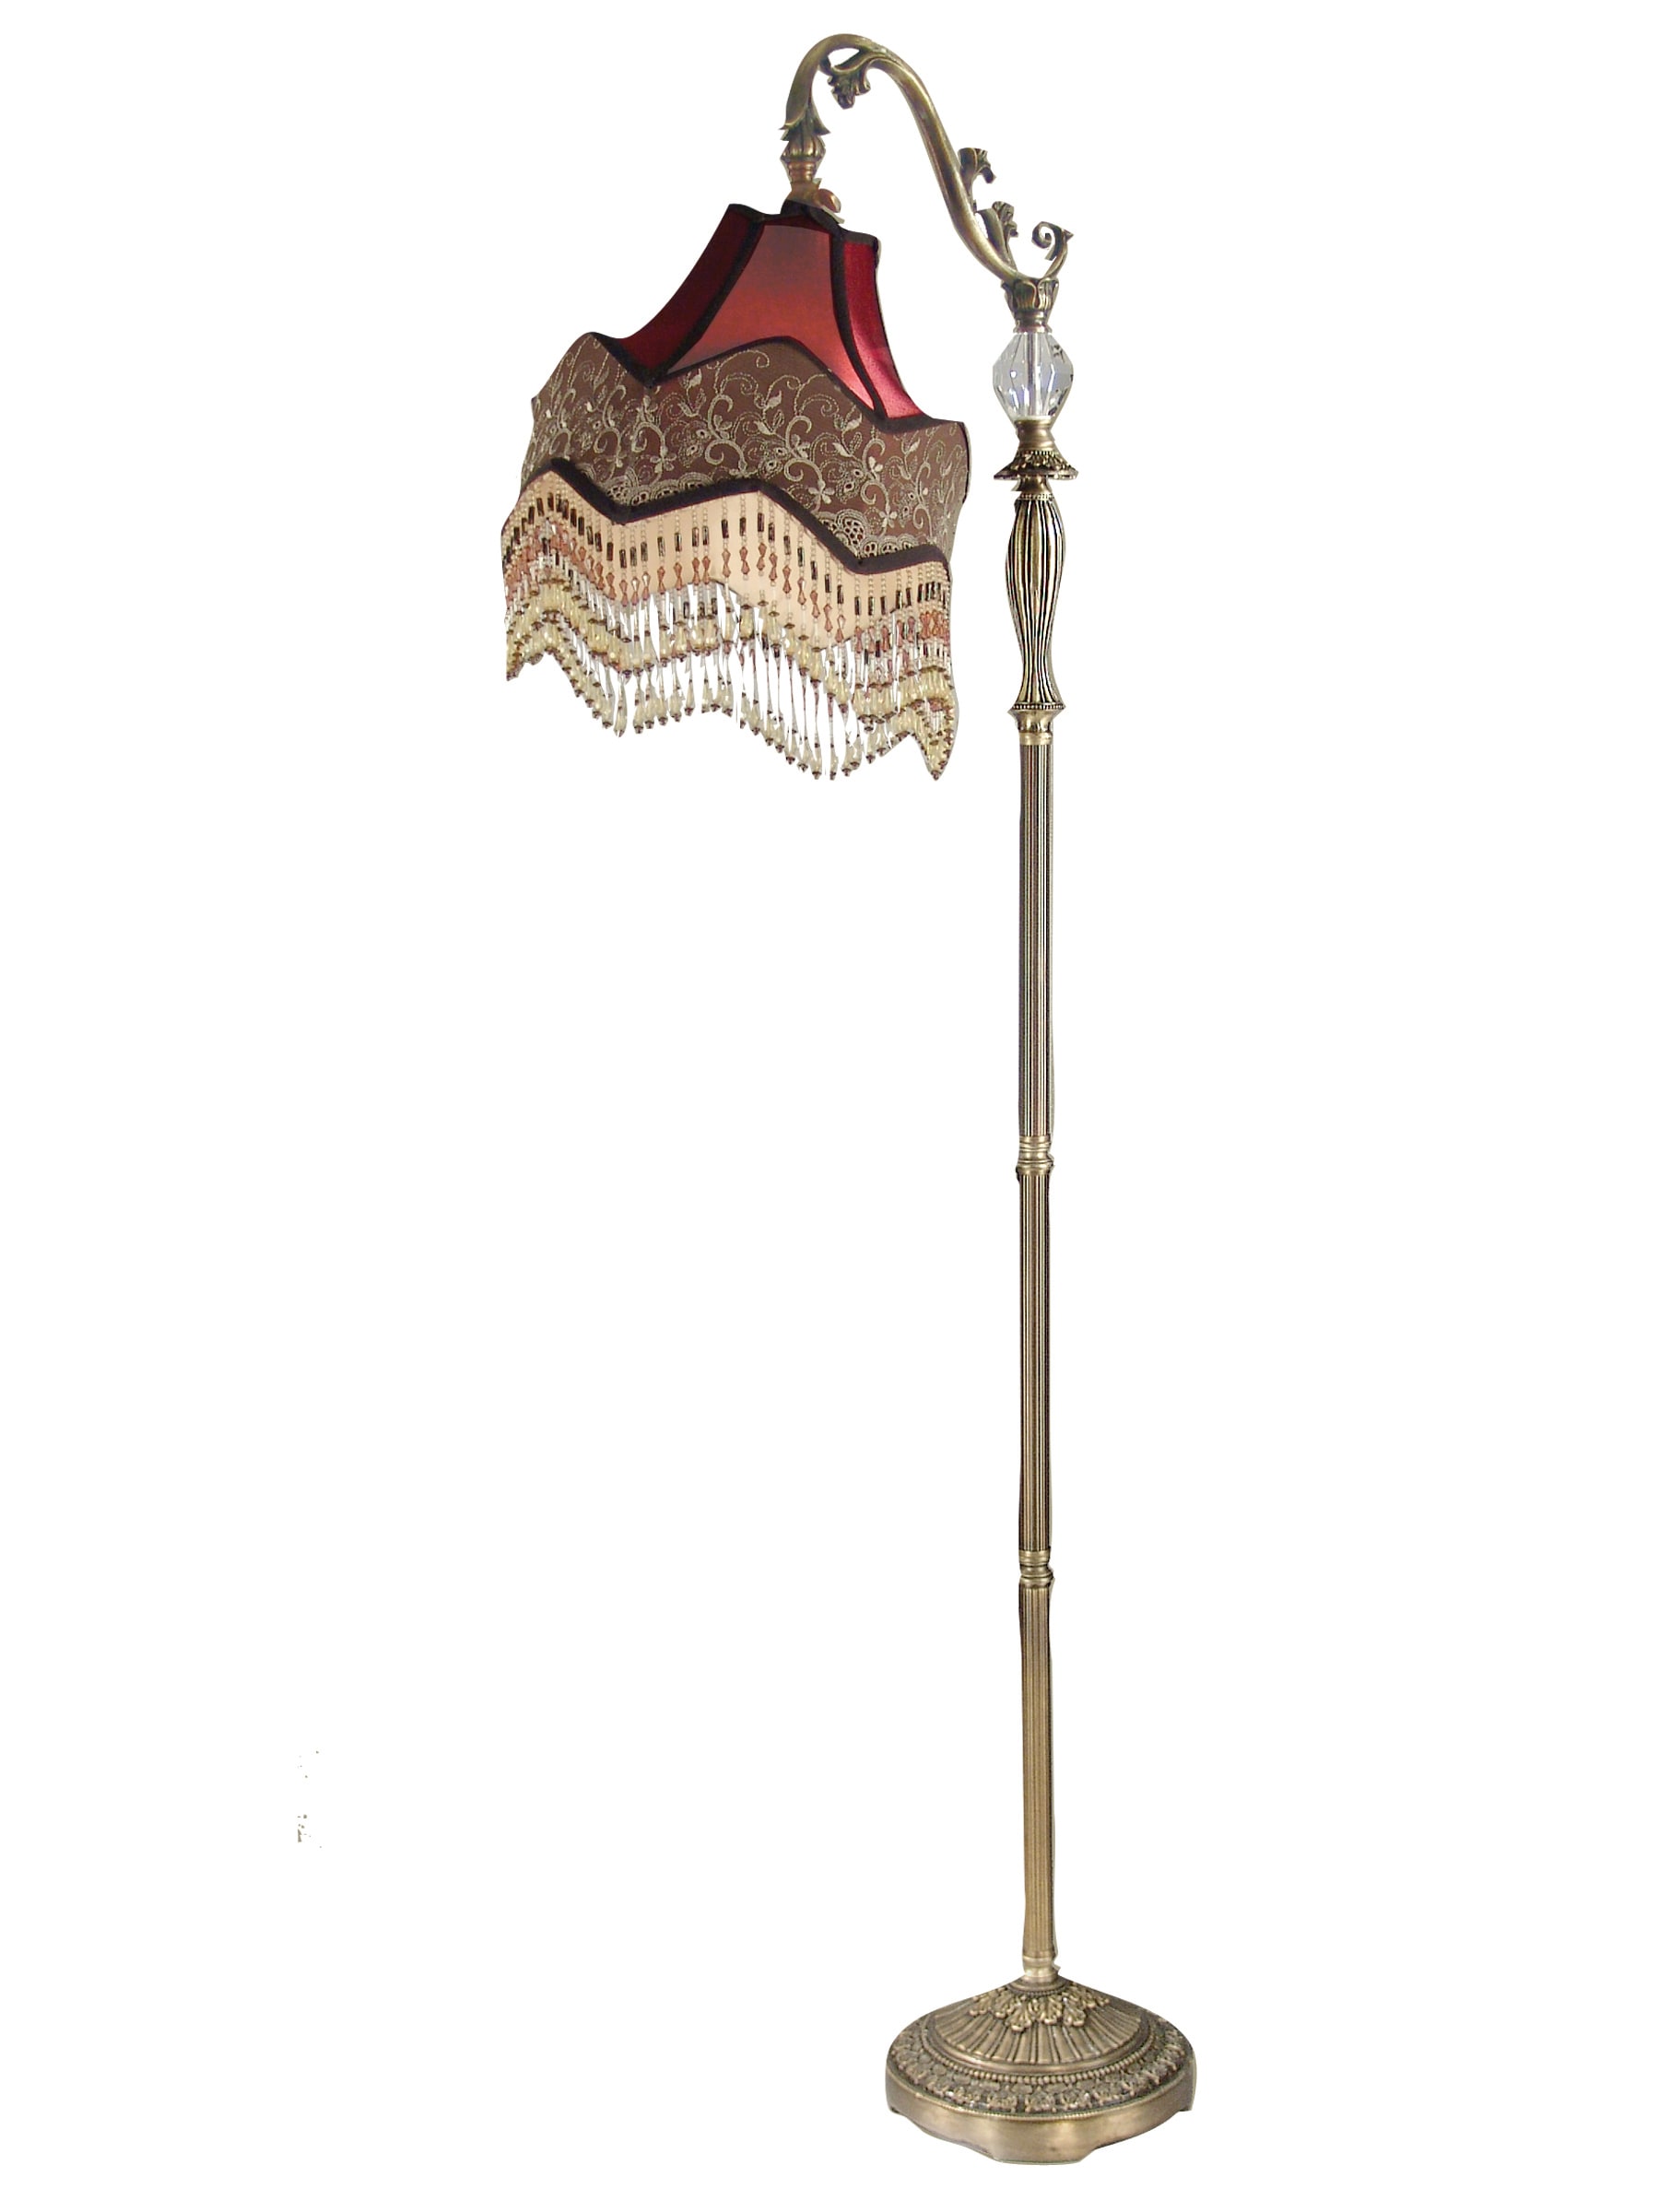 Hectare Zenuw Voorbijganger Dale Tiffany PF60326 Antique Brass Beaded Ruby Downbridge Angled Floor Lamp  with 1 Light - LightingDirect.com